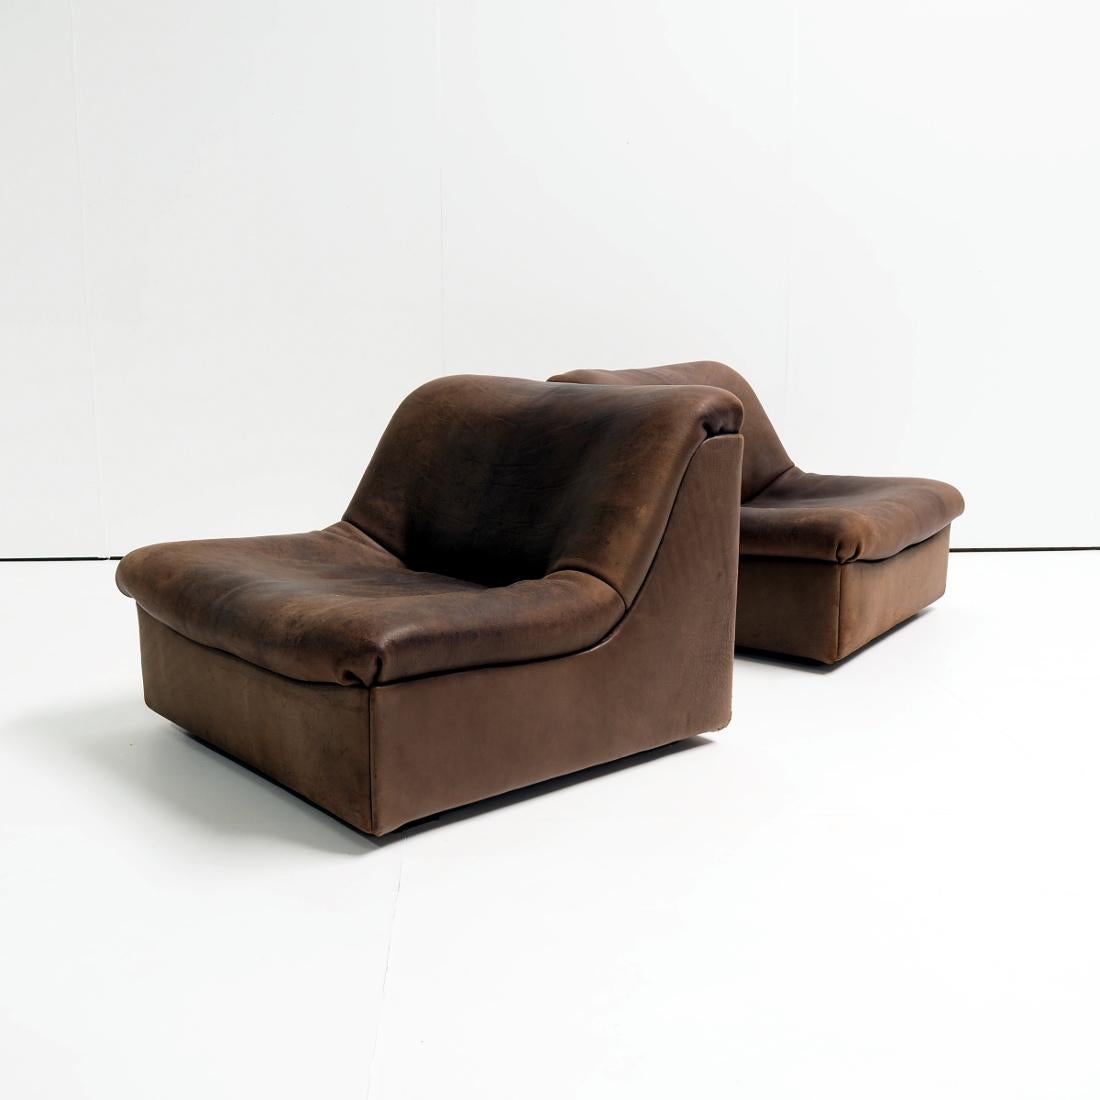 Swiss Set of DS46 De Sede Seats in Leather